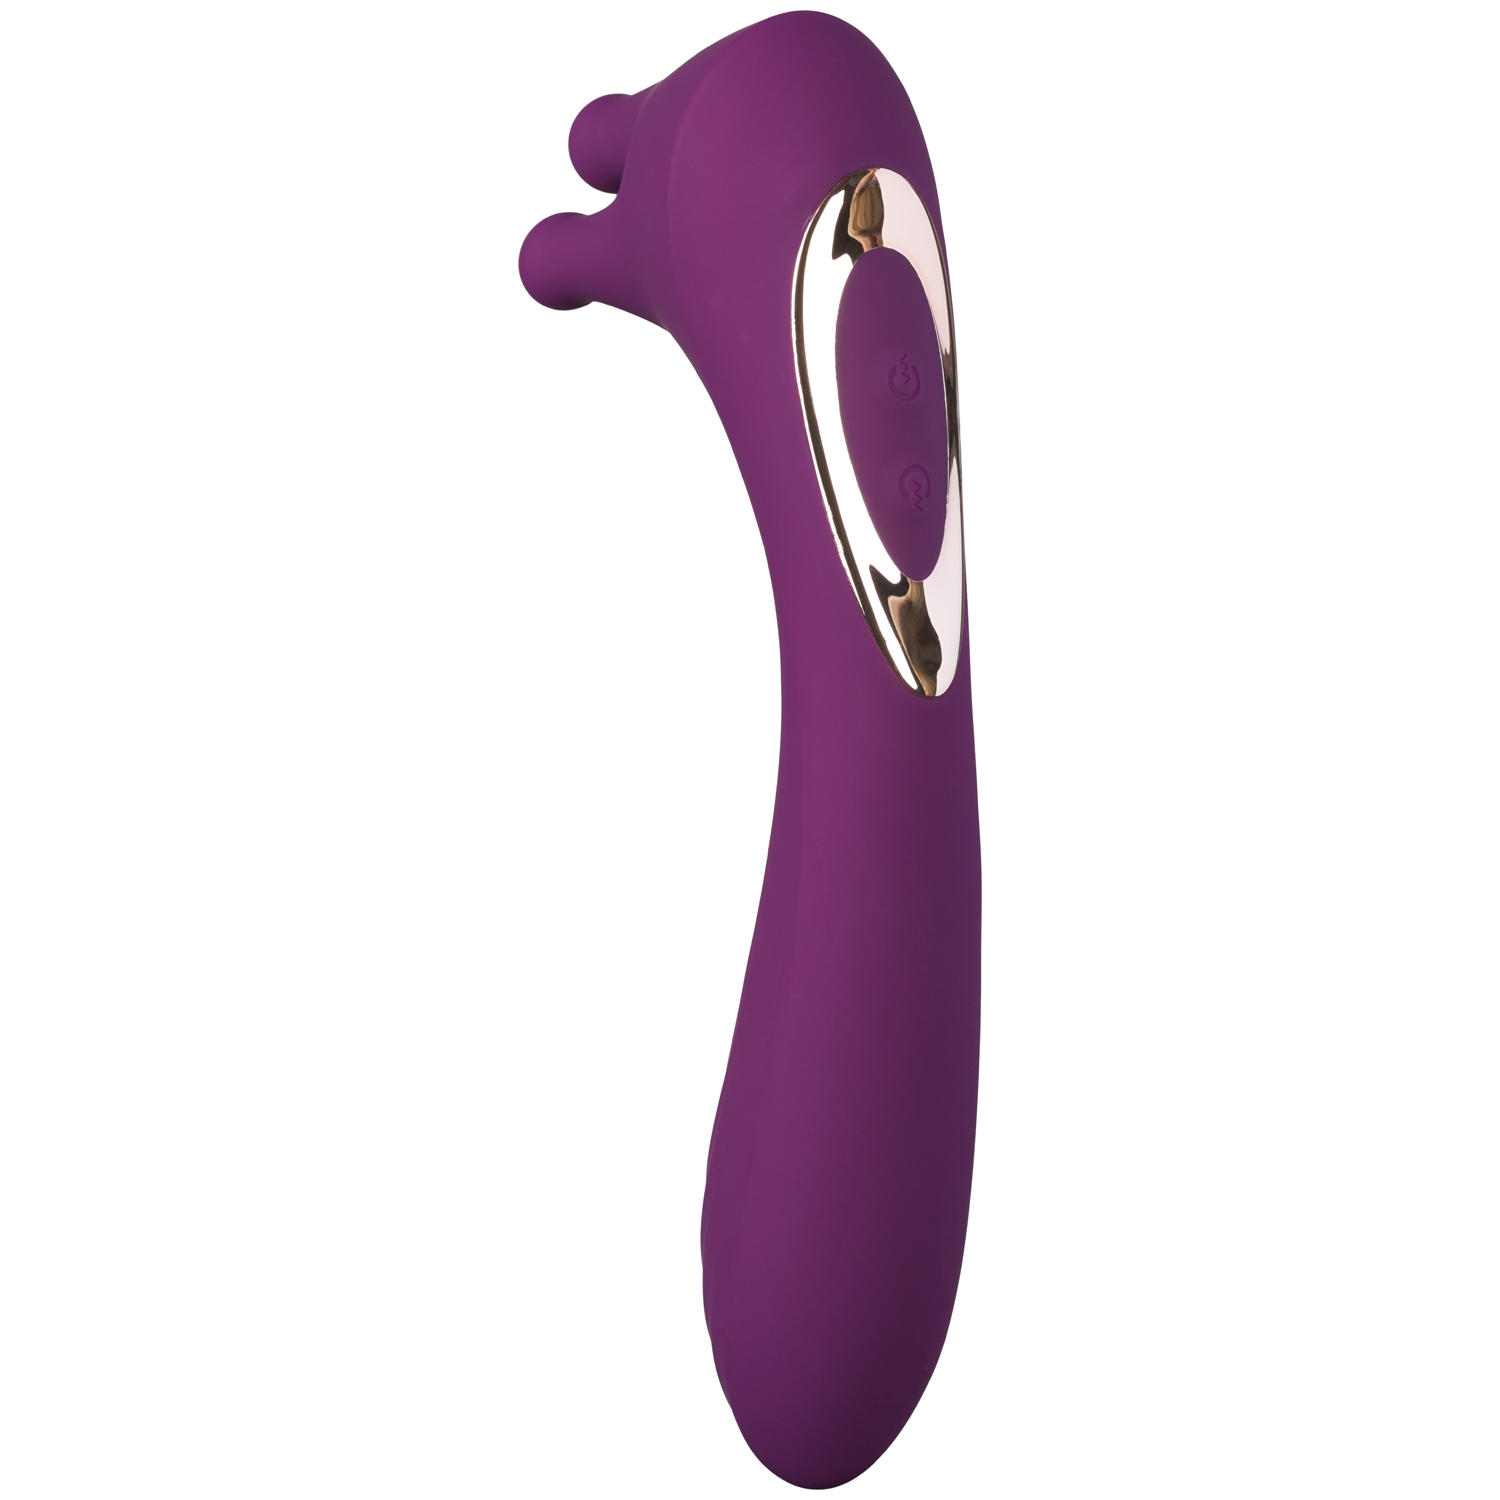 Tracy&apos;s Dog Goldfinger G-punkts Vibrator - Purple thumbnail